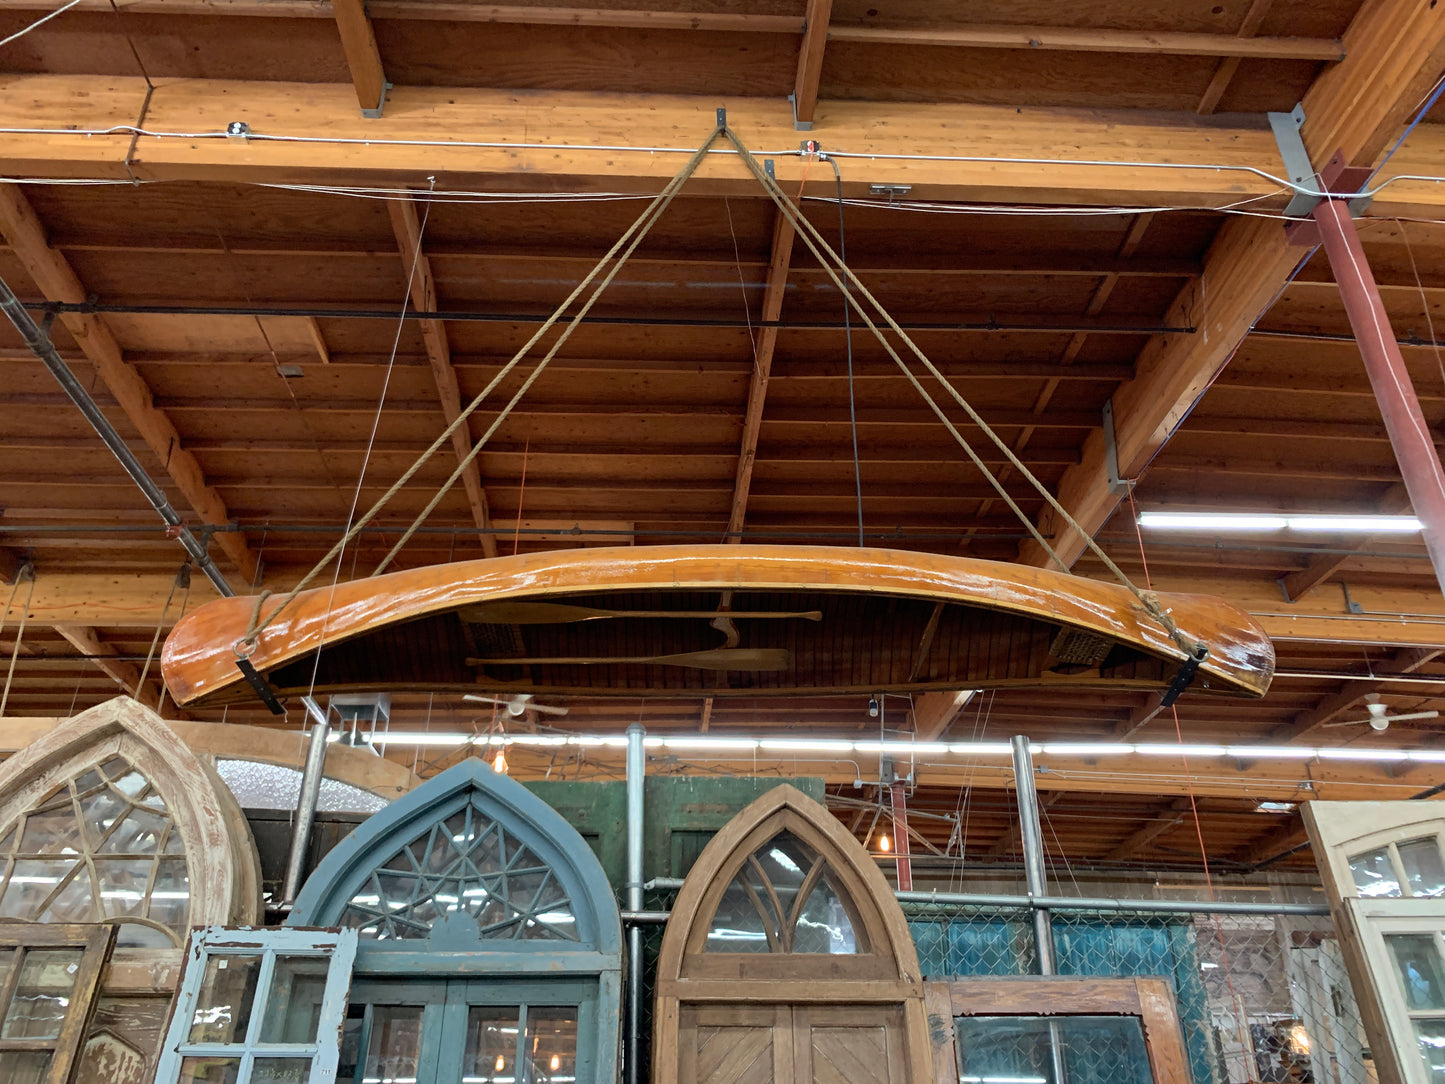 Repurposed Wood Canoe Pendant Light